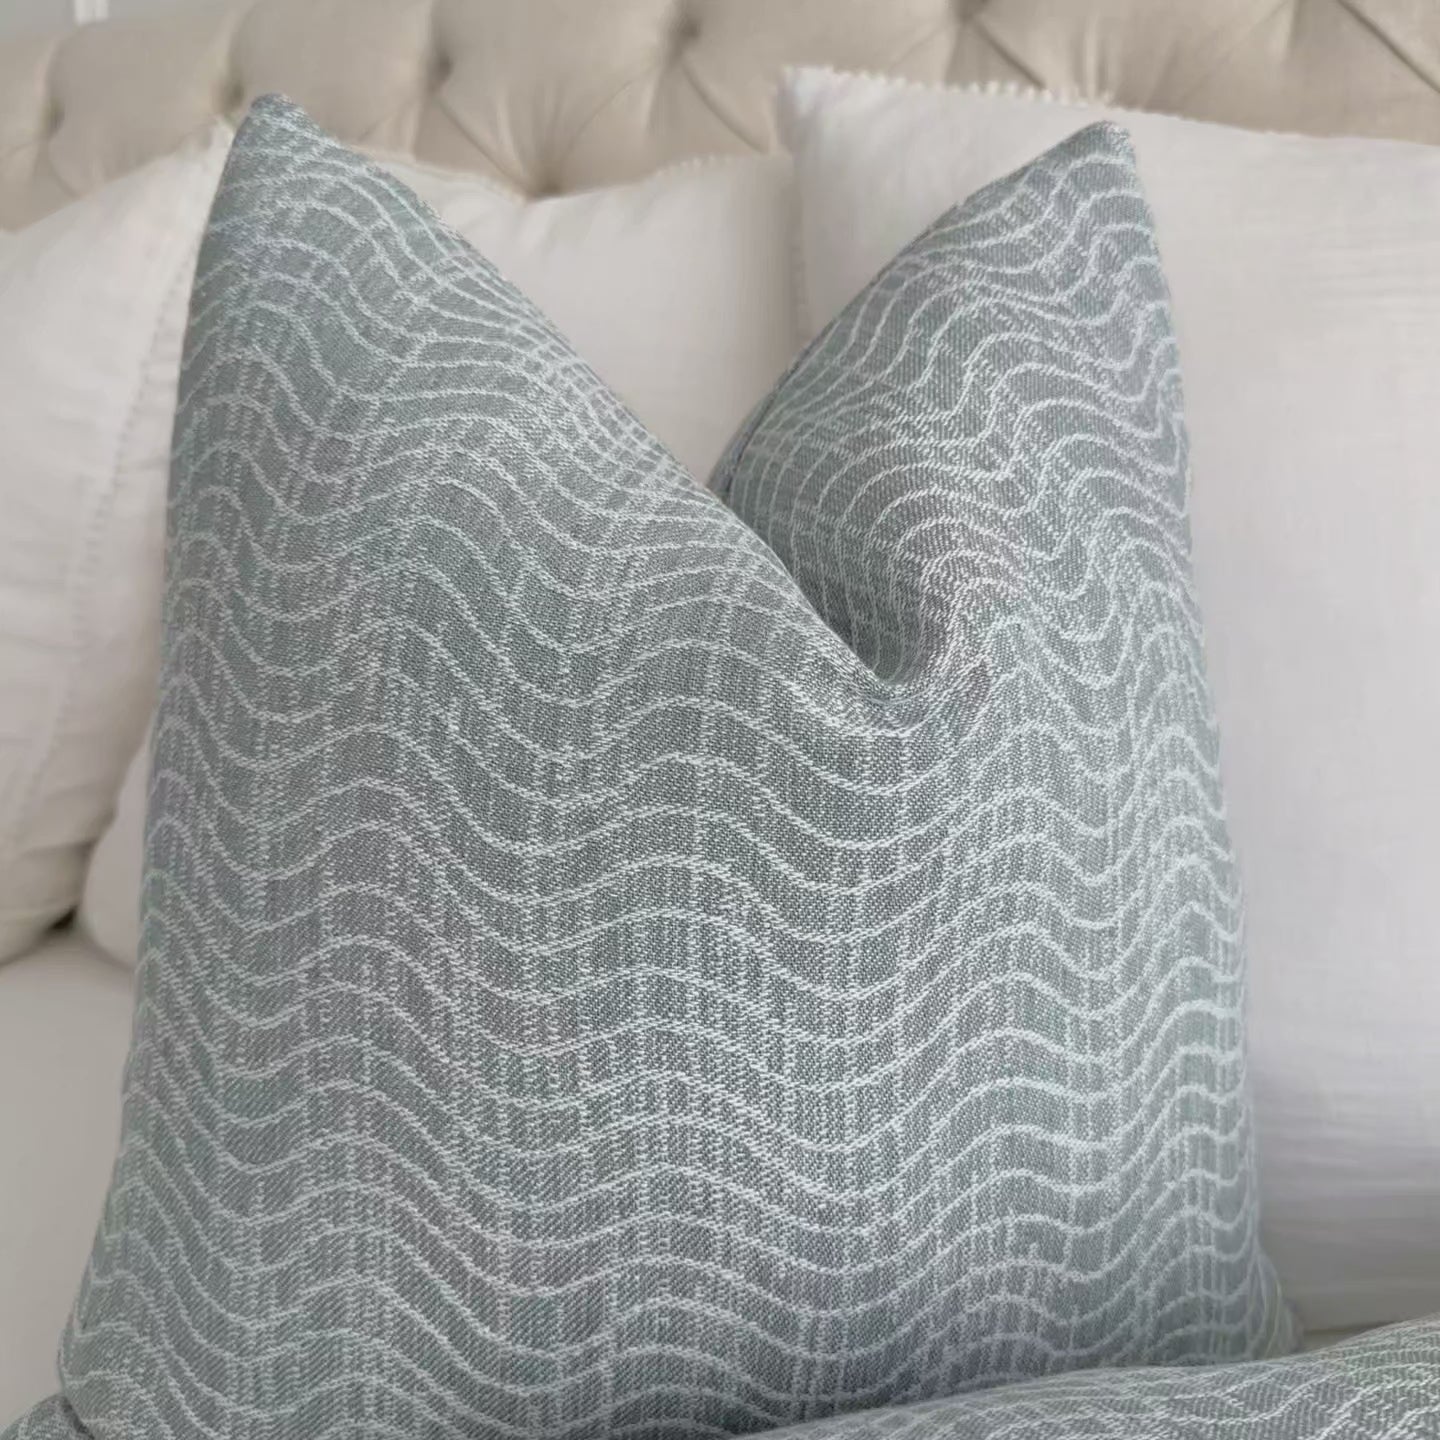 Kelly Wearstler Lee Jofa Dadami Pool Blue Woven Linen Striped Designer Throw Pillow Cover Product Video